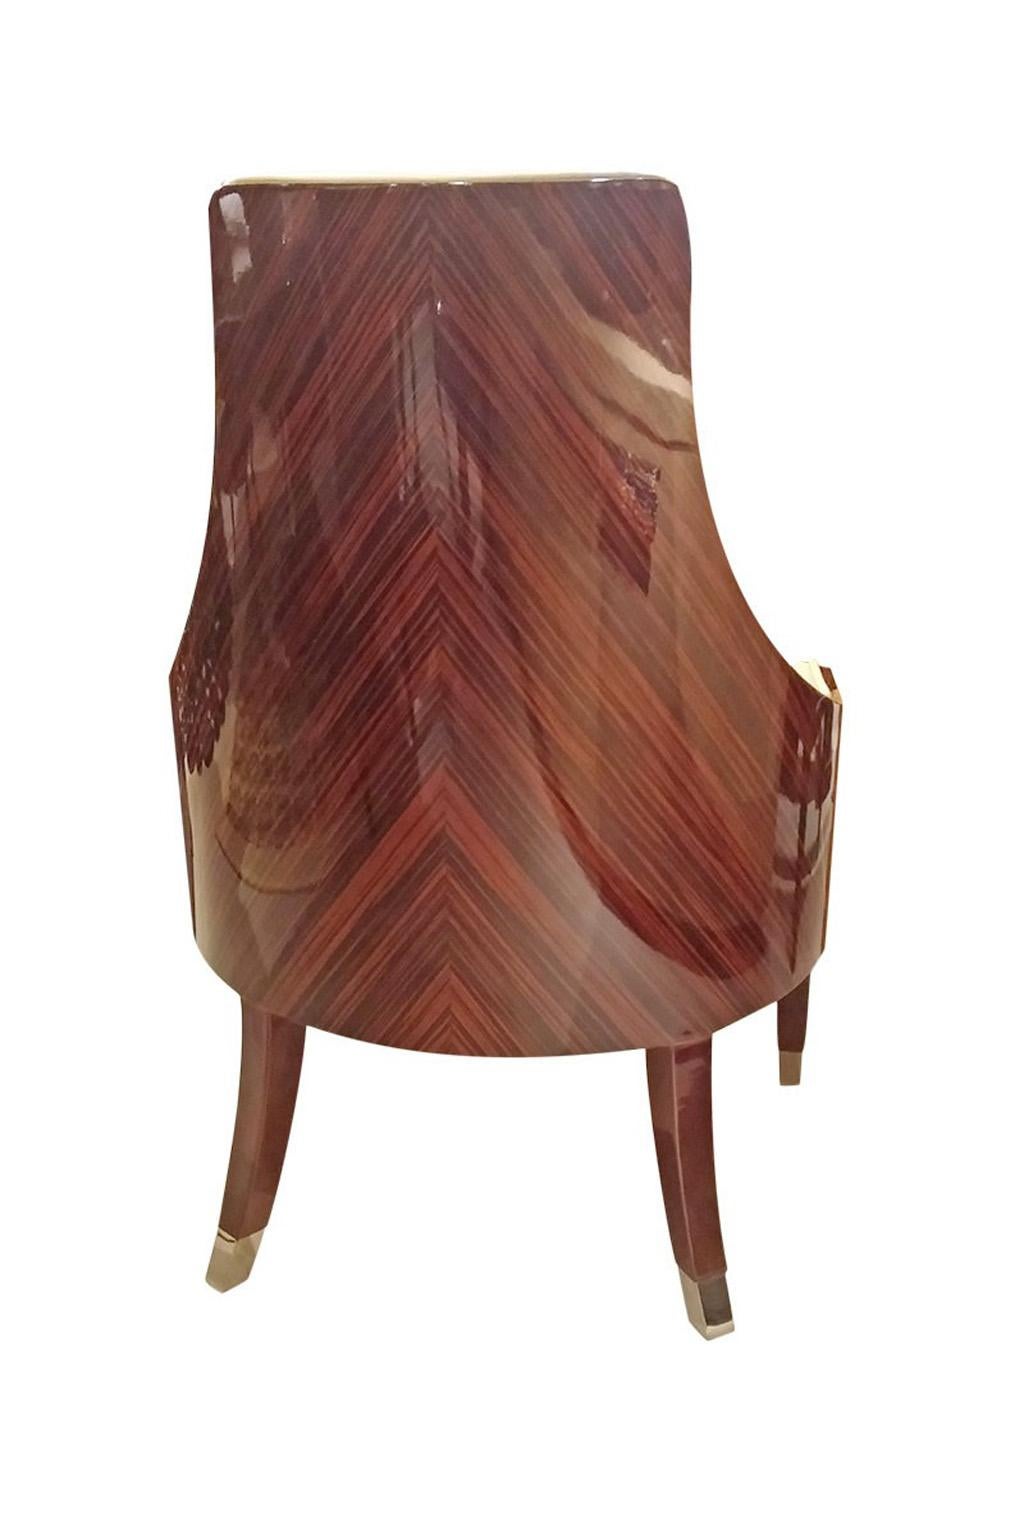 Ovaler Beistellstuhl in Ebenholz mit hochglänzendem Polyesterbezug
in hochwertigem Leder.
Füße aus Chromstahl.

28